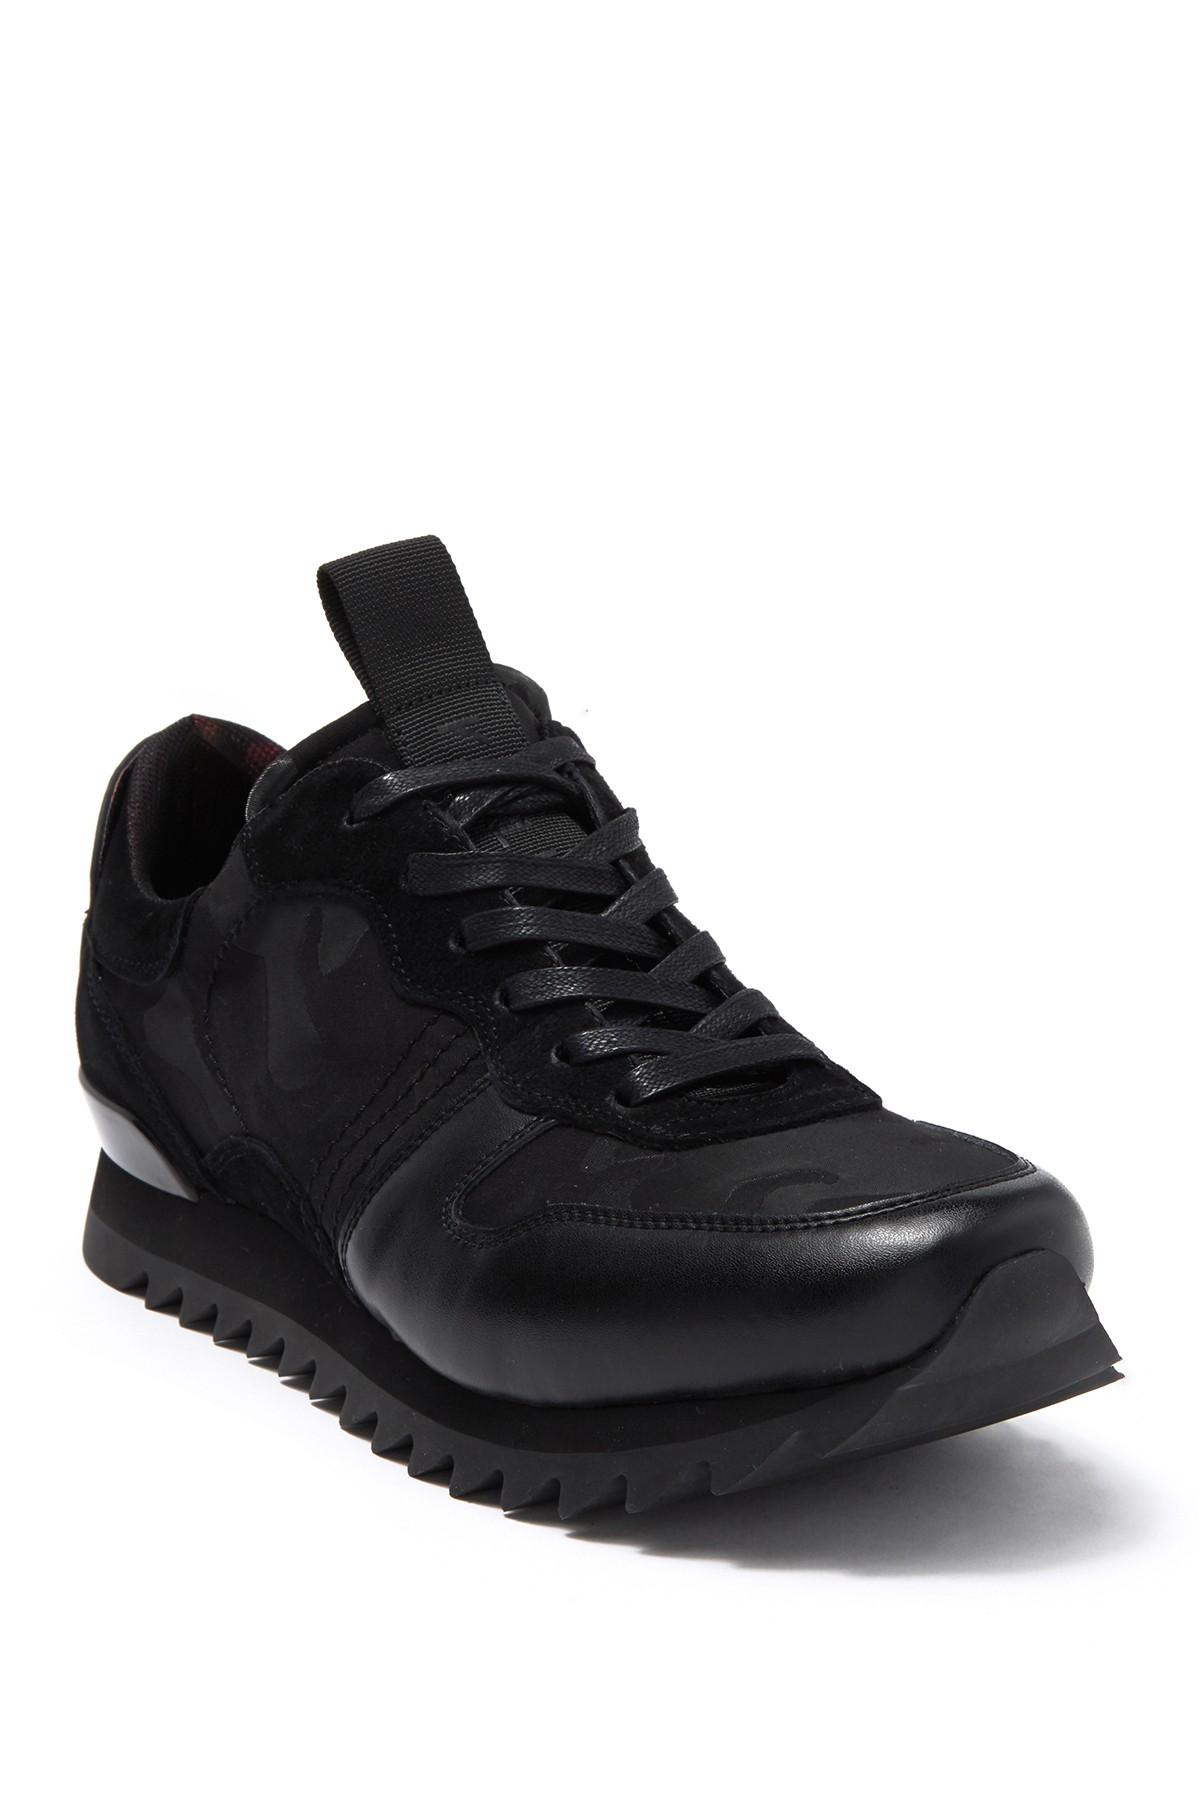 Karl Lagerfeld Suede Camo Runner Sneaker in Black/Grey (Black) for Men ...